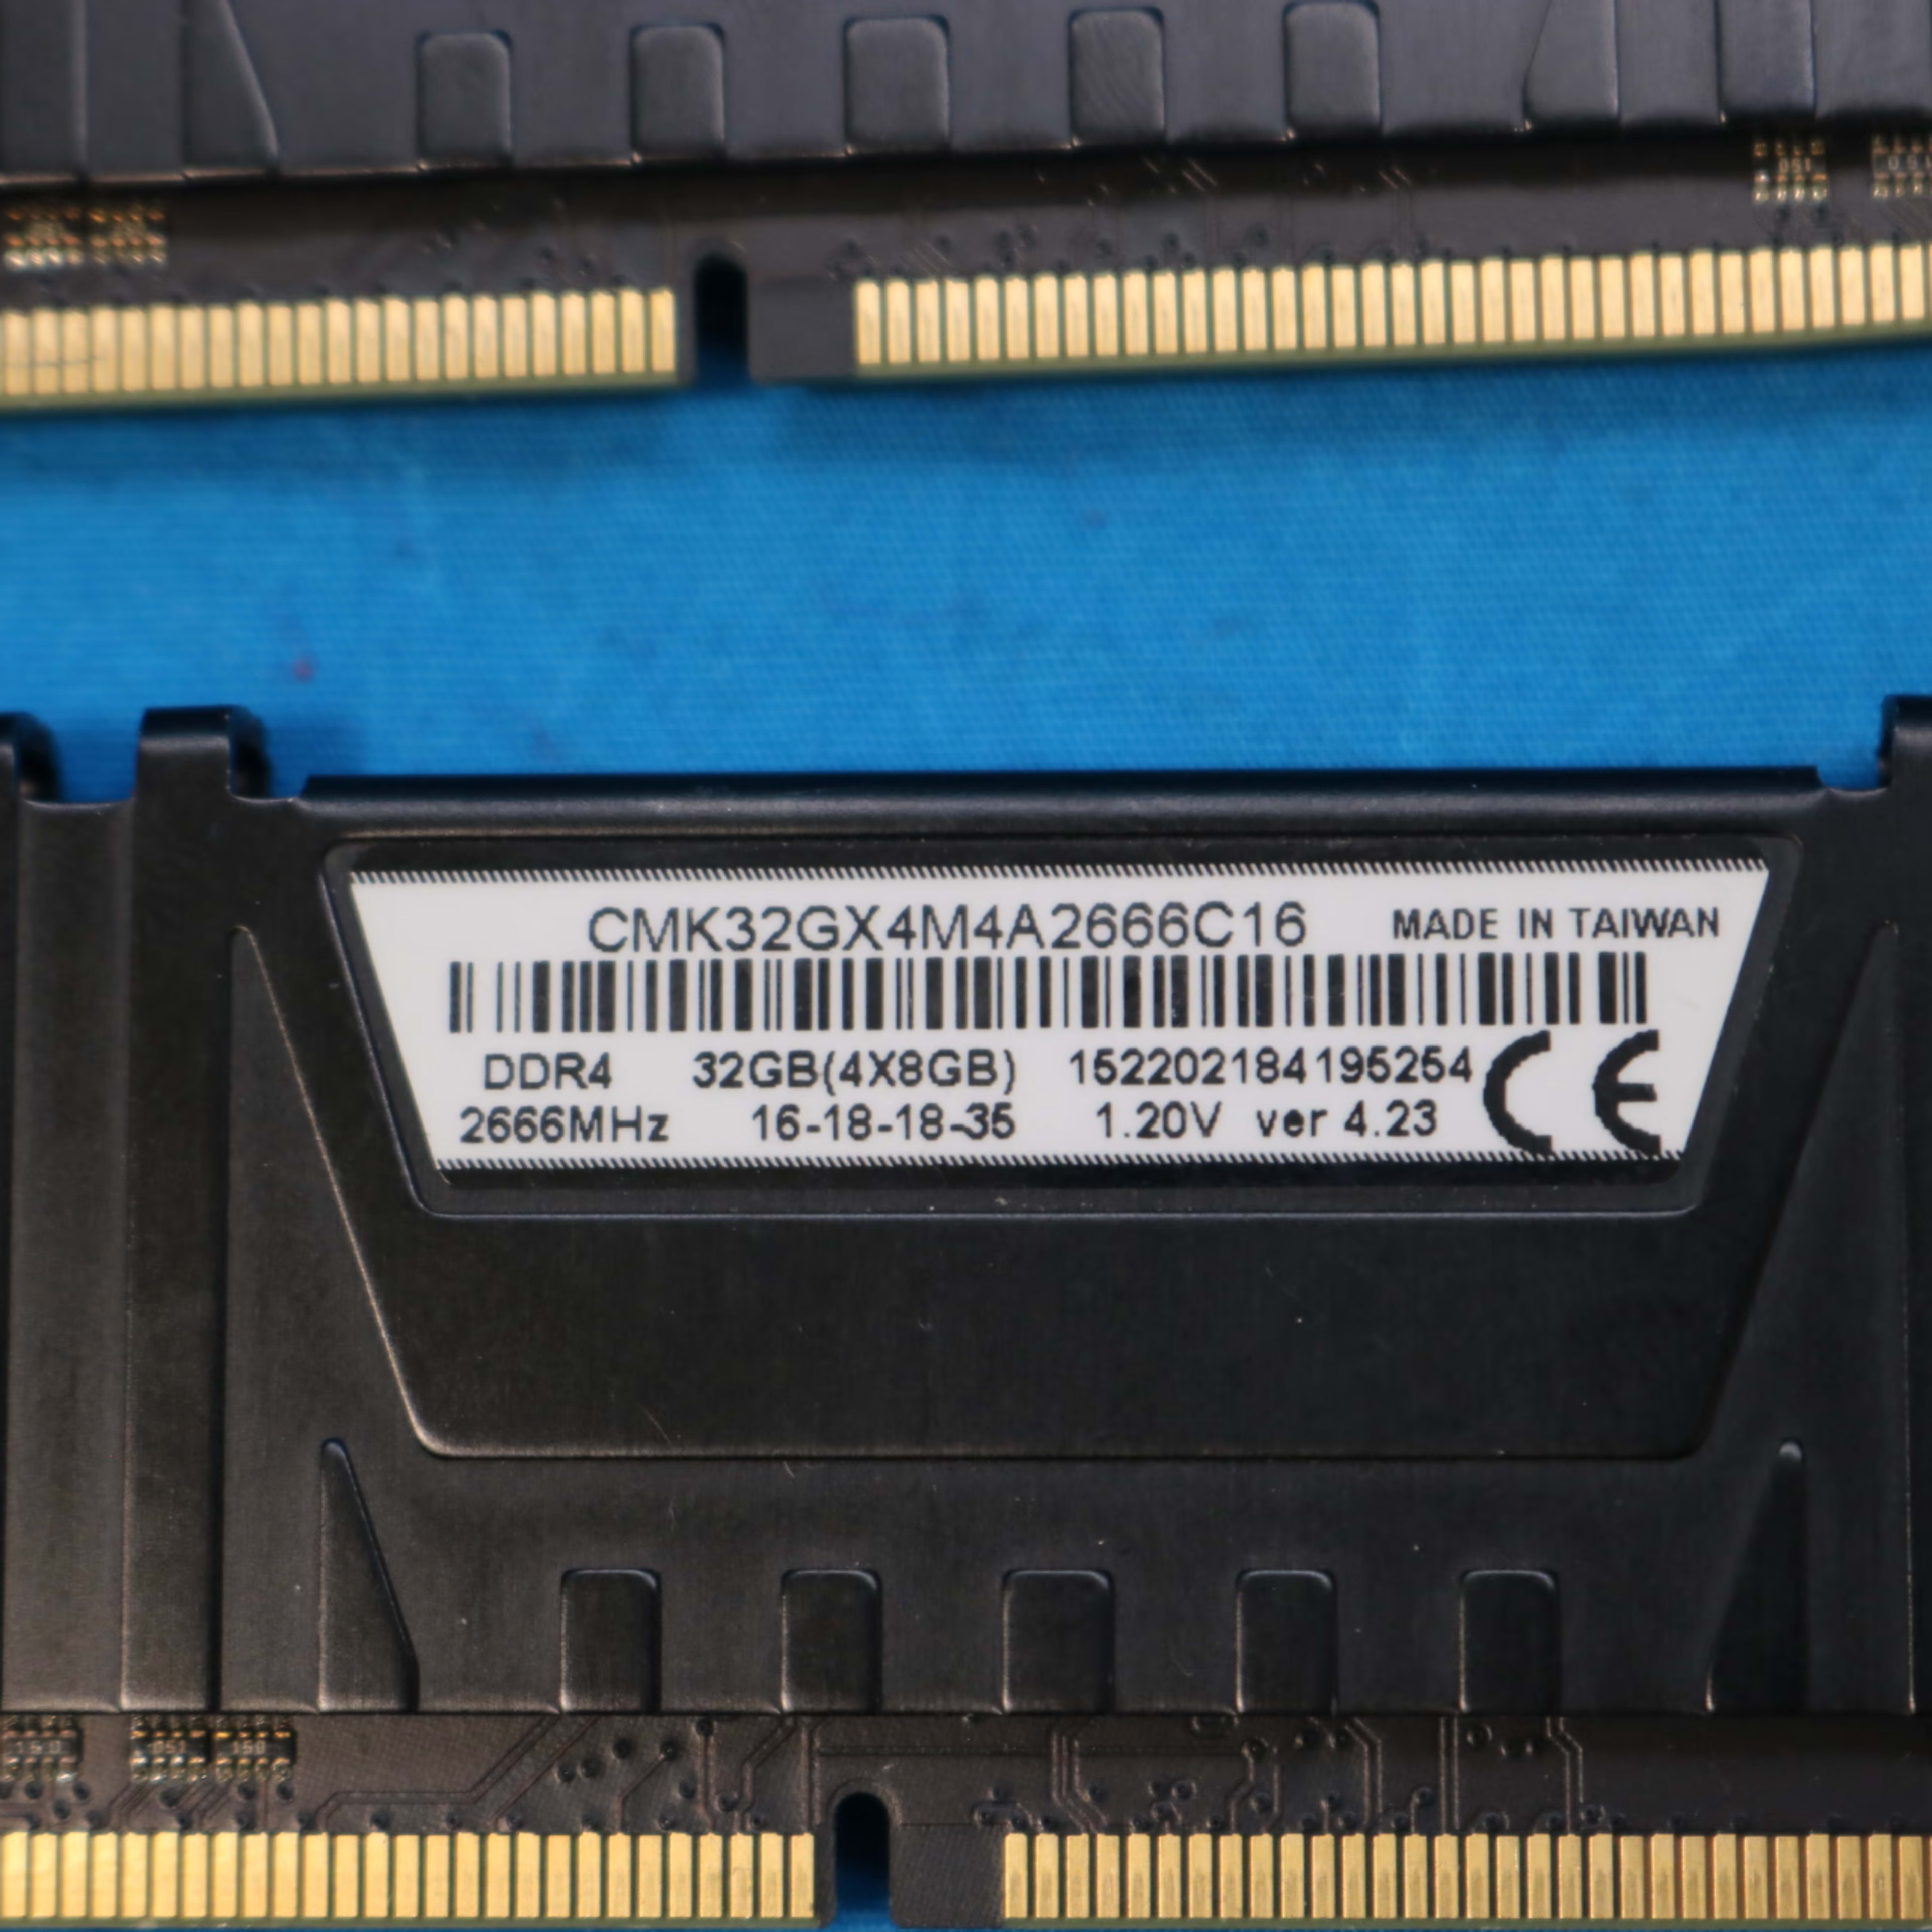 Corsair Vengeance LPX 32GB (4x8GB) DDR4 2666MHz CL16 1.20V Desktop